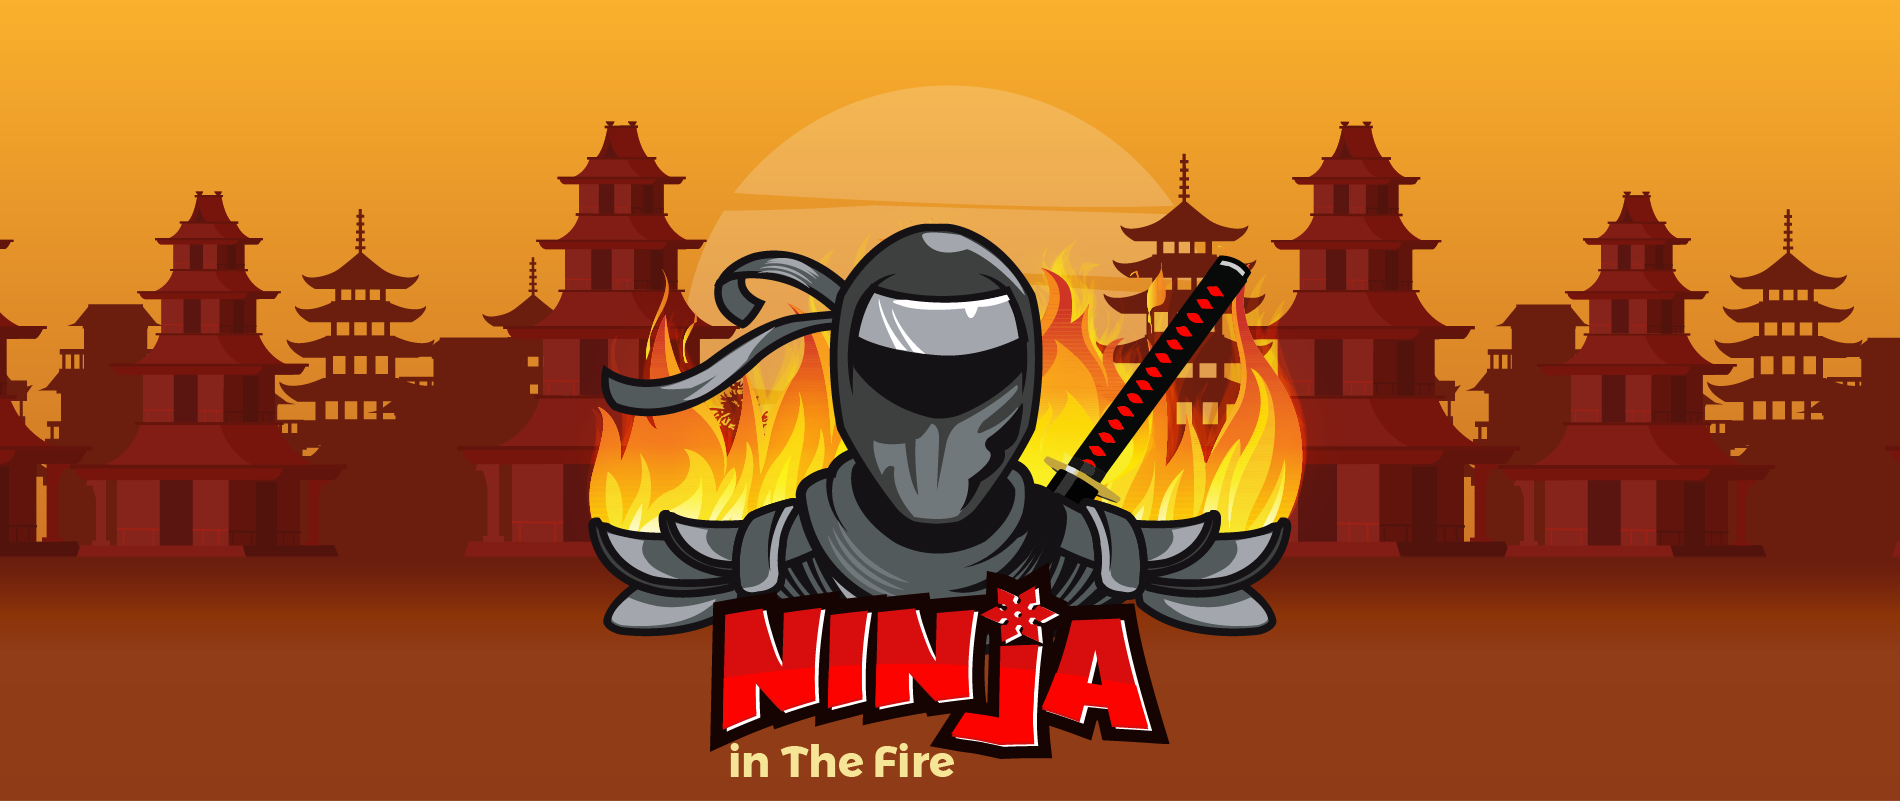 Ninja in the Fire